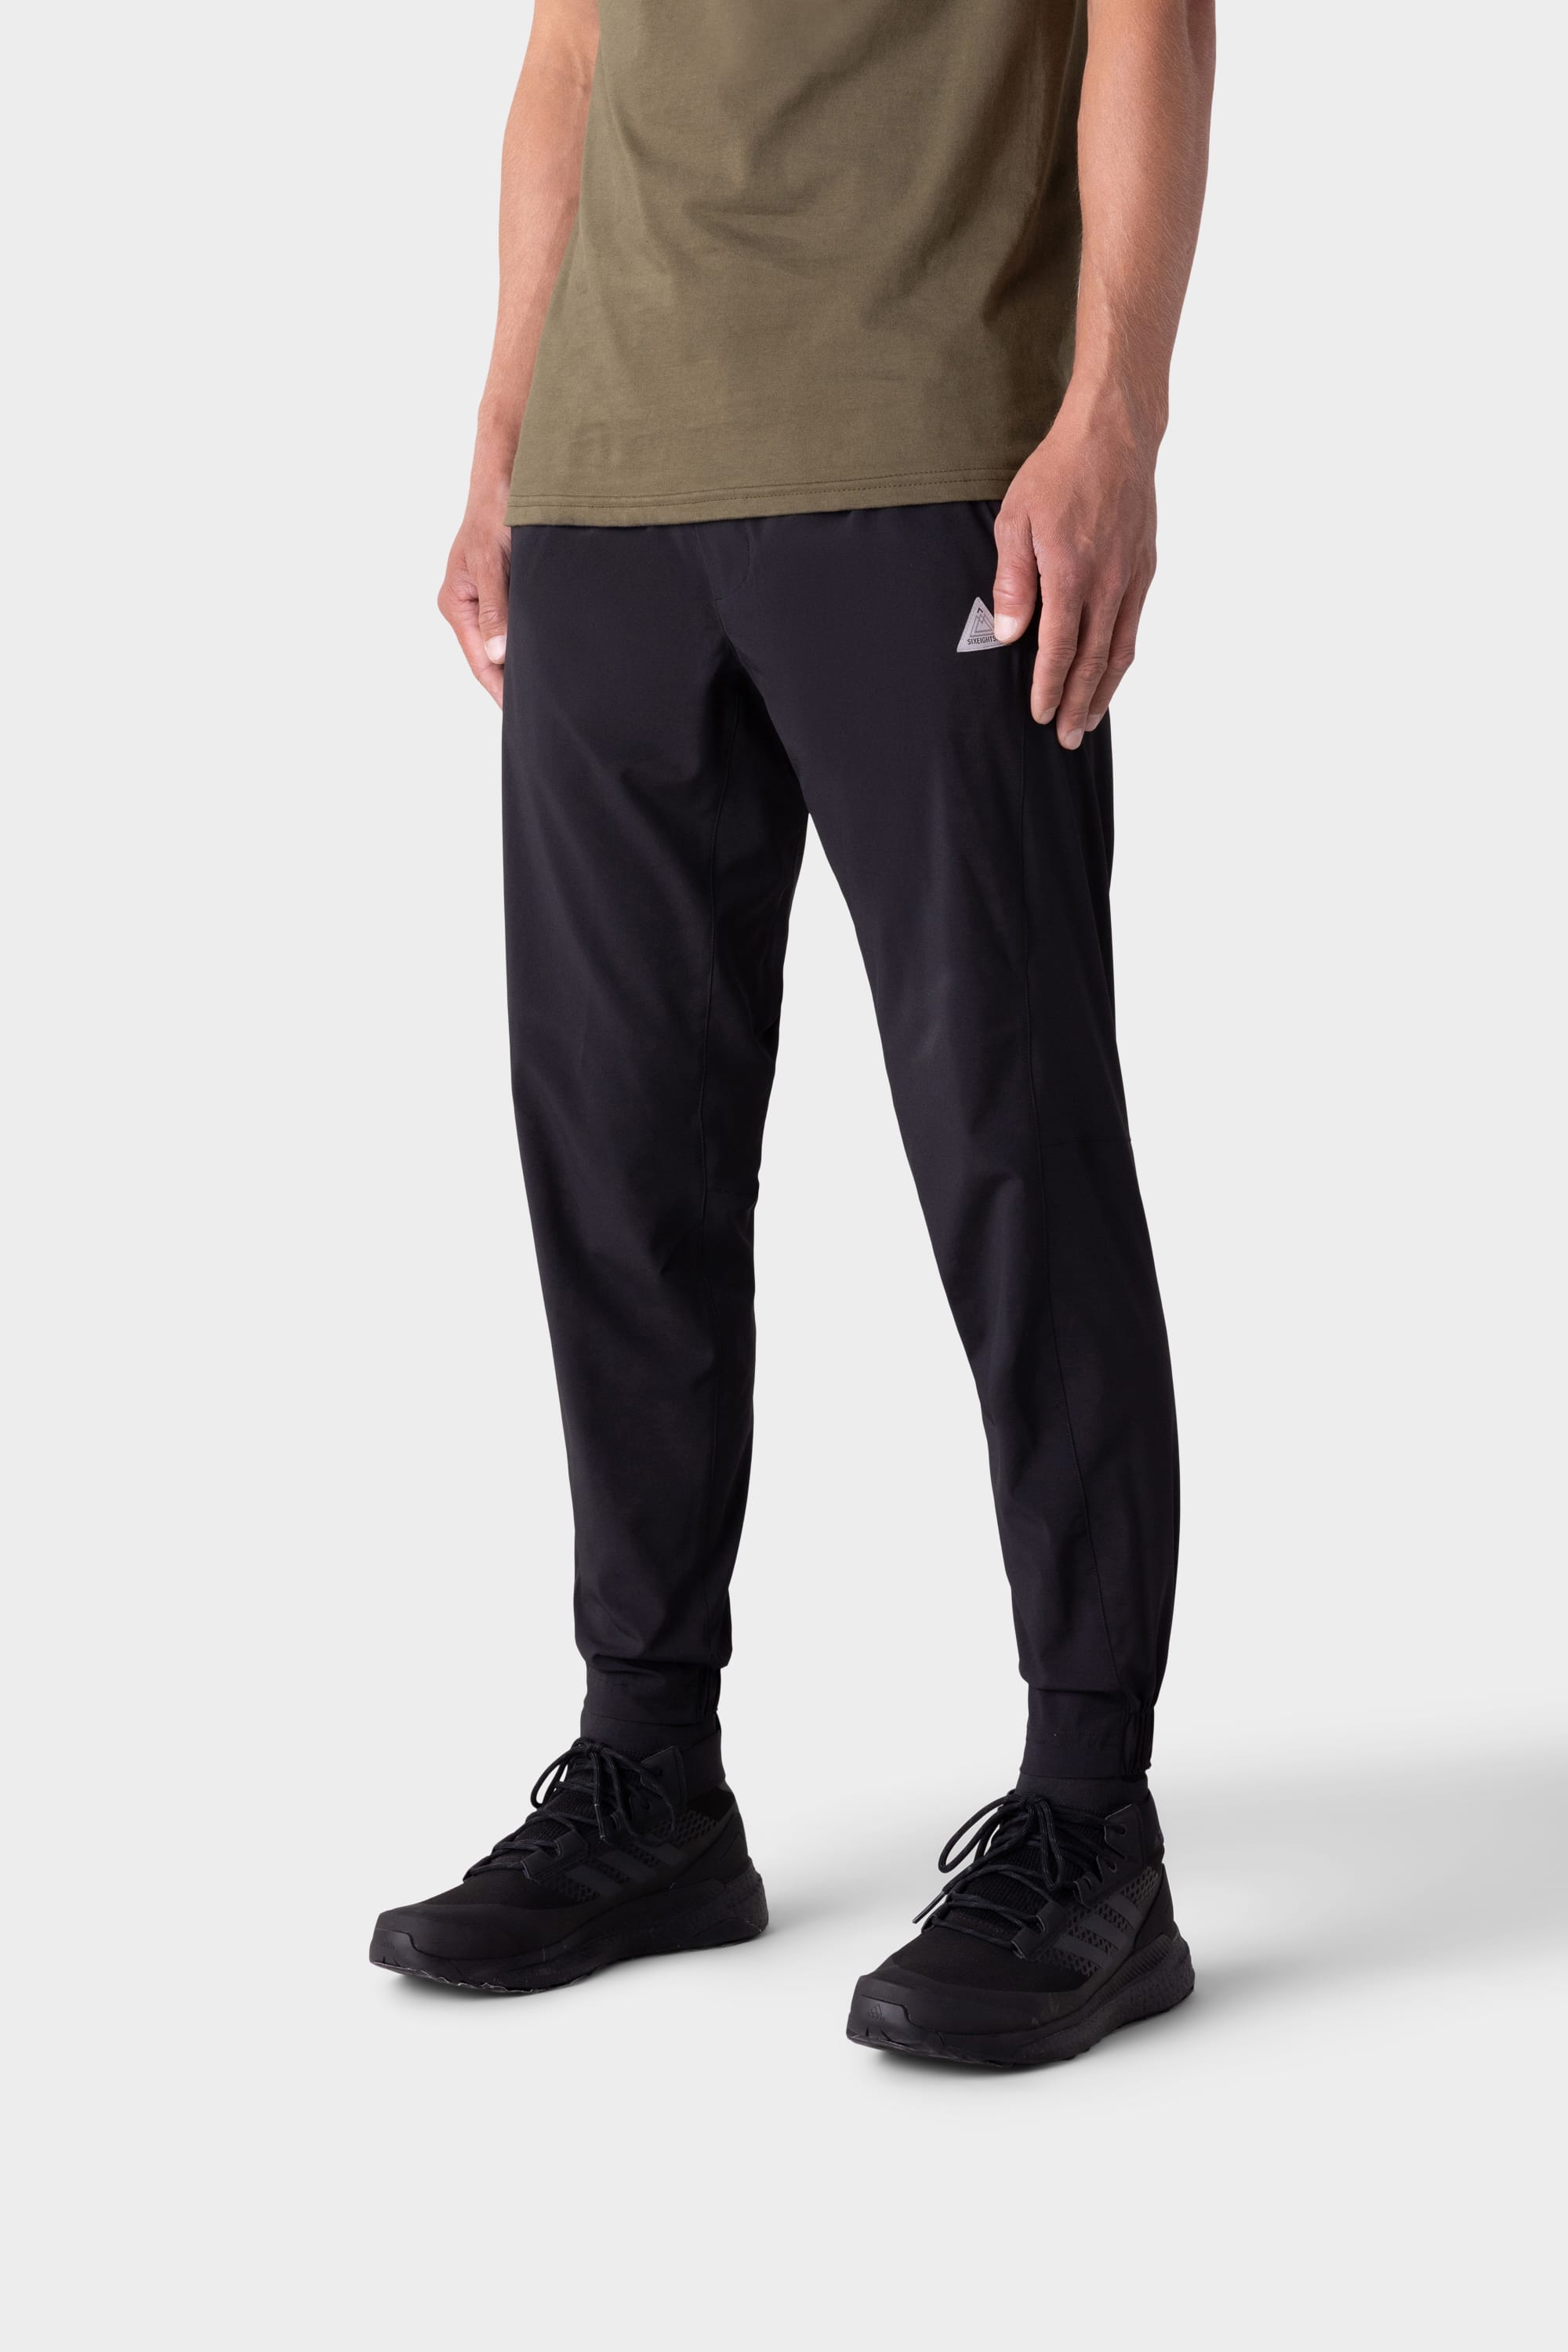 NWT Reebok Slim Athletic Fit Black Men's Jogger Sweatpants Size 2XL Zipper  Legs